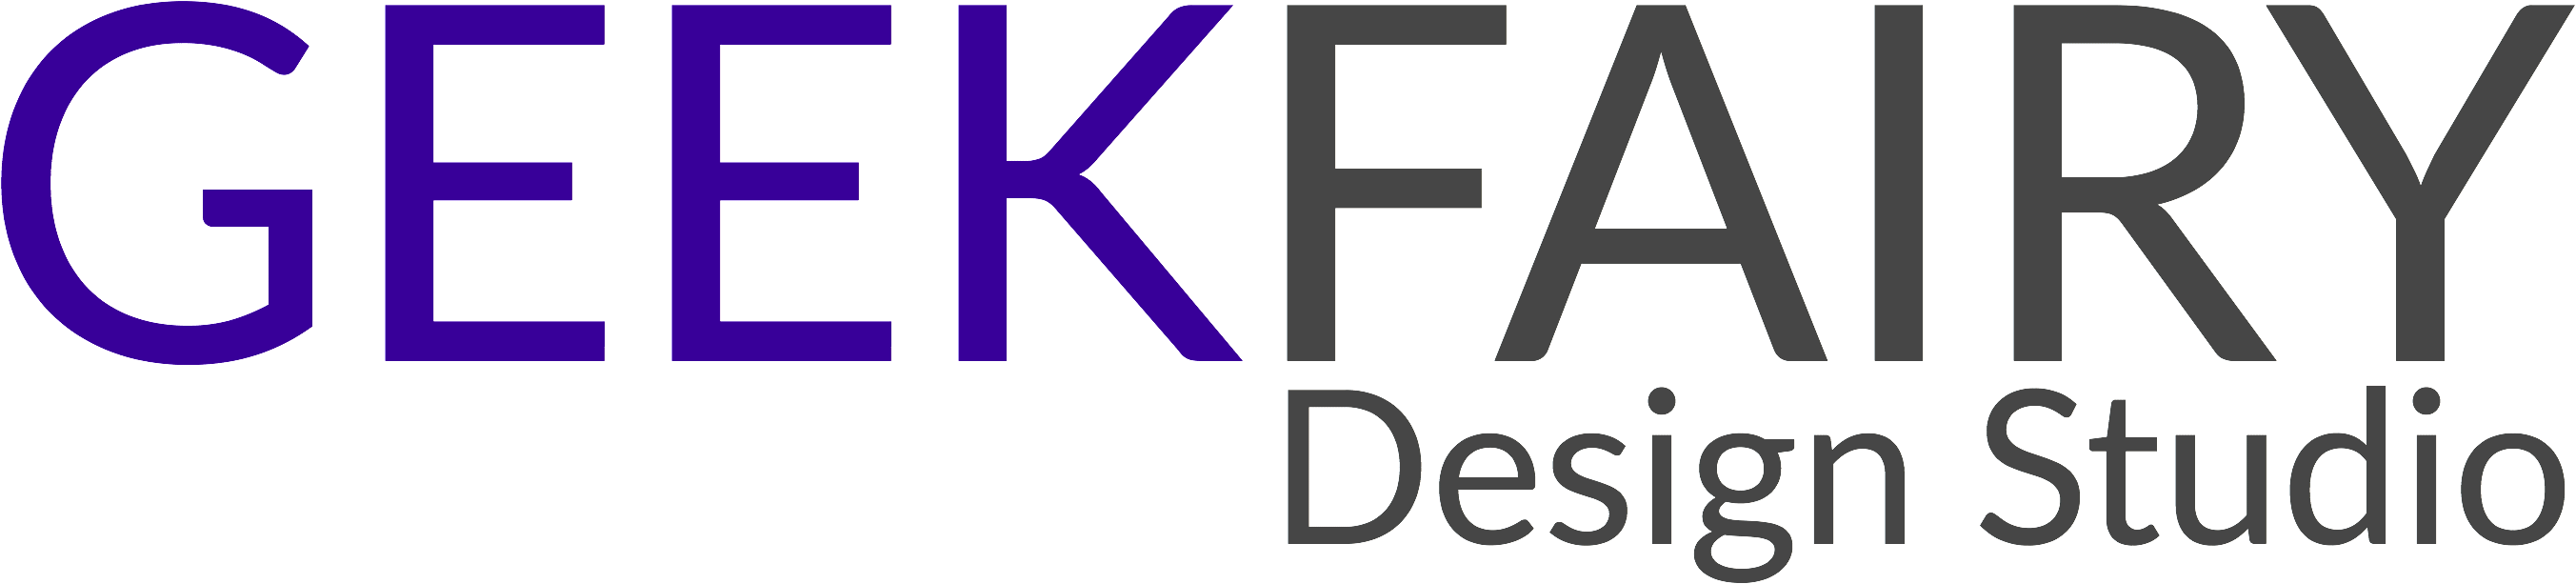 Geek Fairy Design Studio Logo PNG image